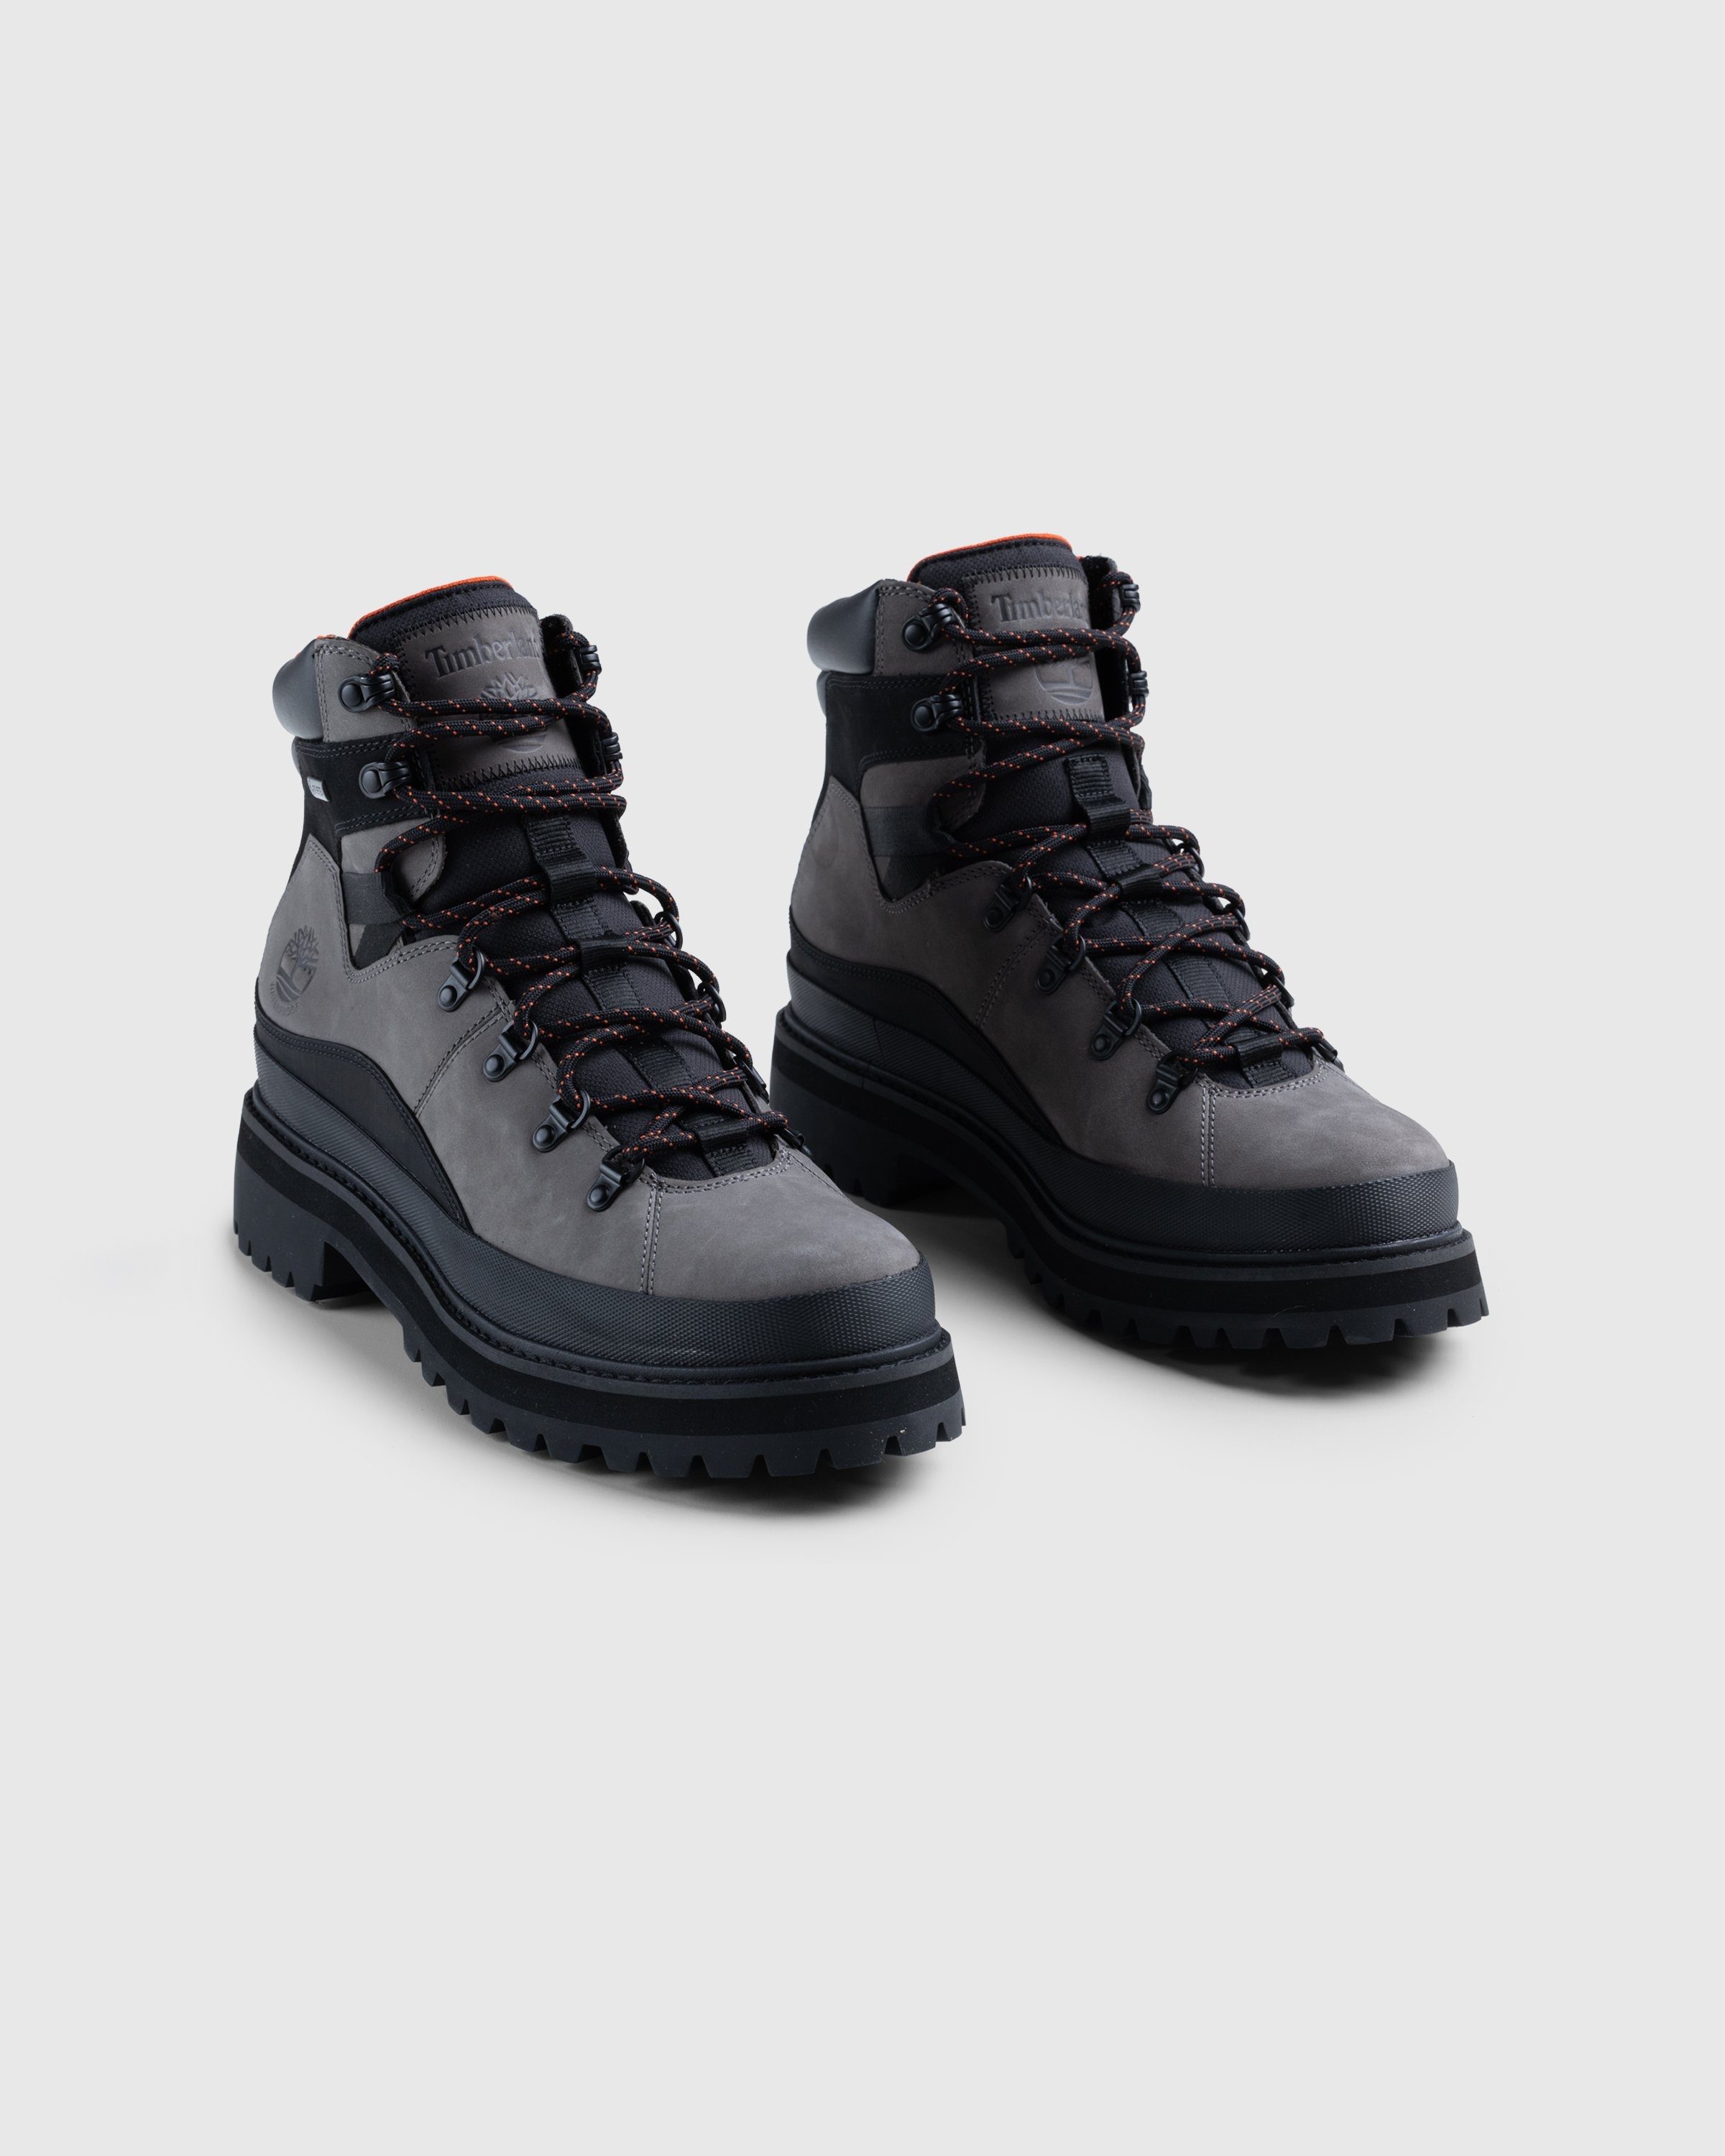 Timberland – Vibram GTX Boot Castlerock - Boots - Grey - Image 3